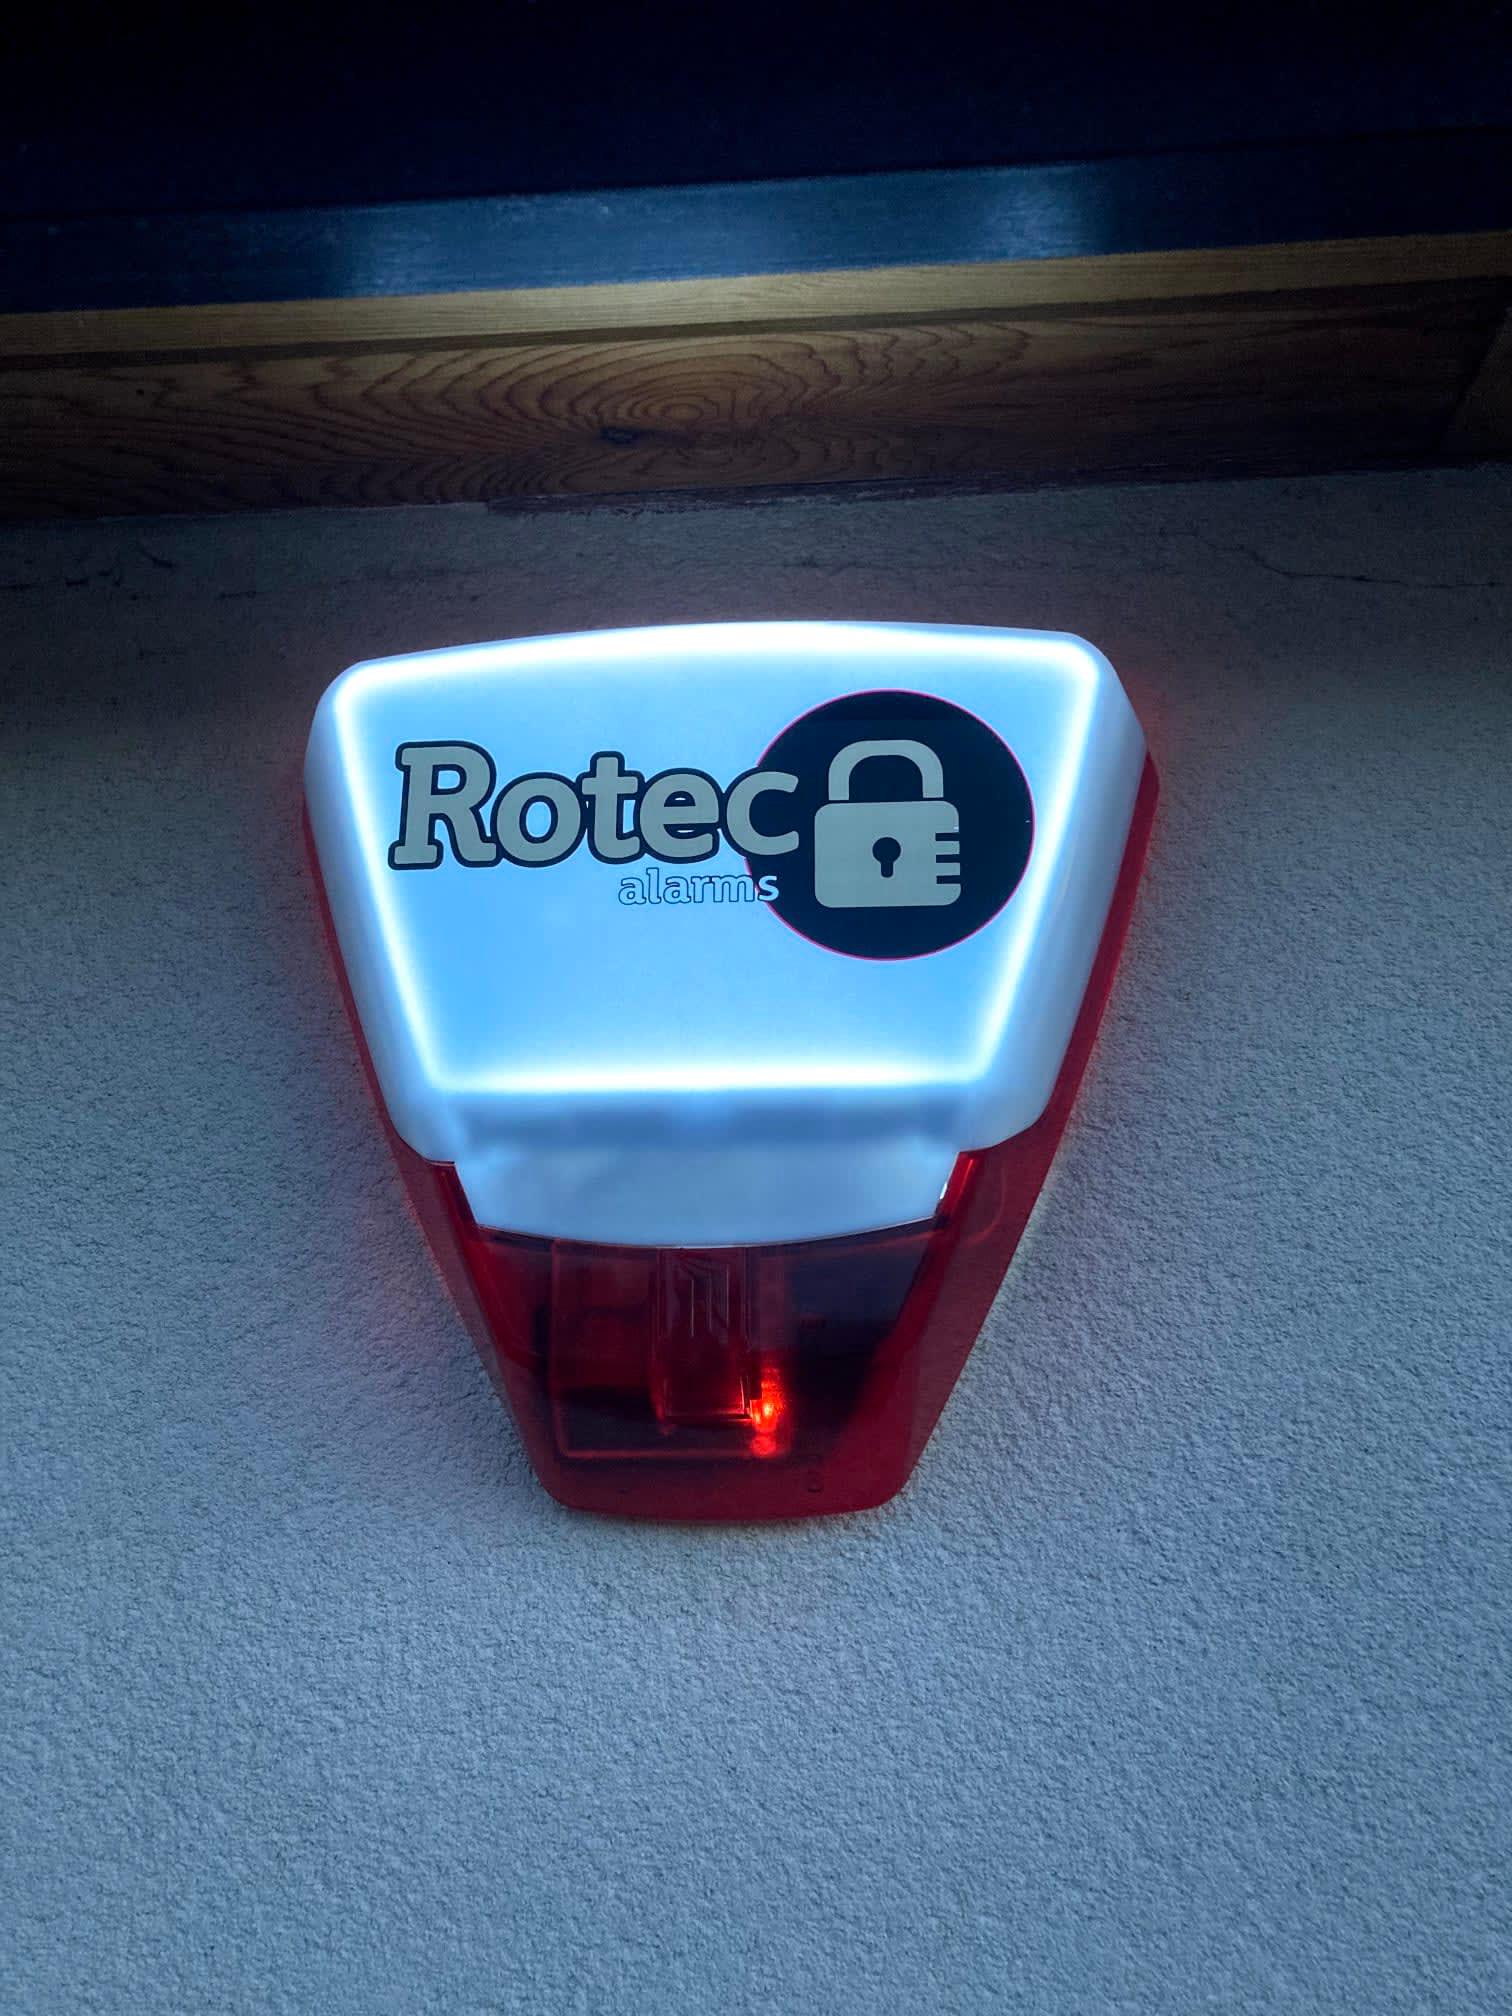 Images Rotec Alarms Ltd